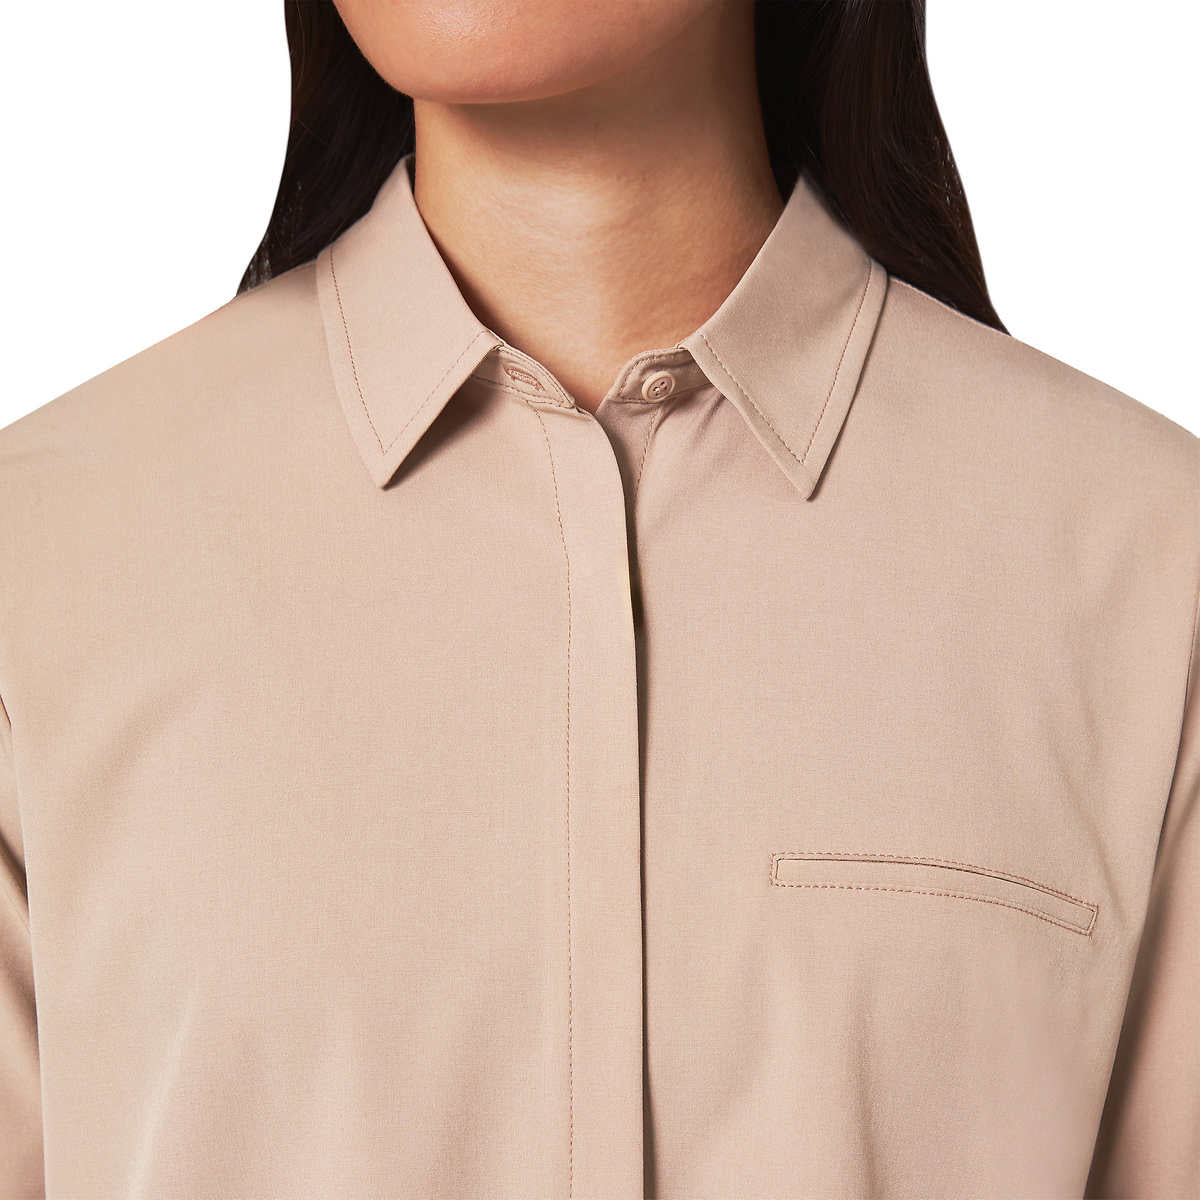 modern-ambition-chemise-femme-women's-shirt-voyage-travel-16